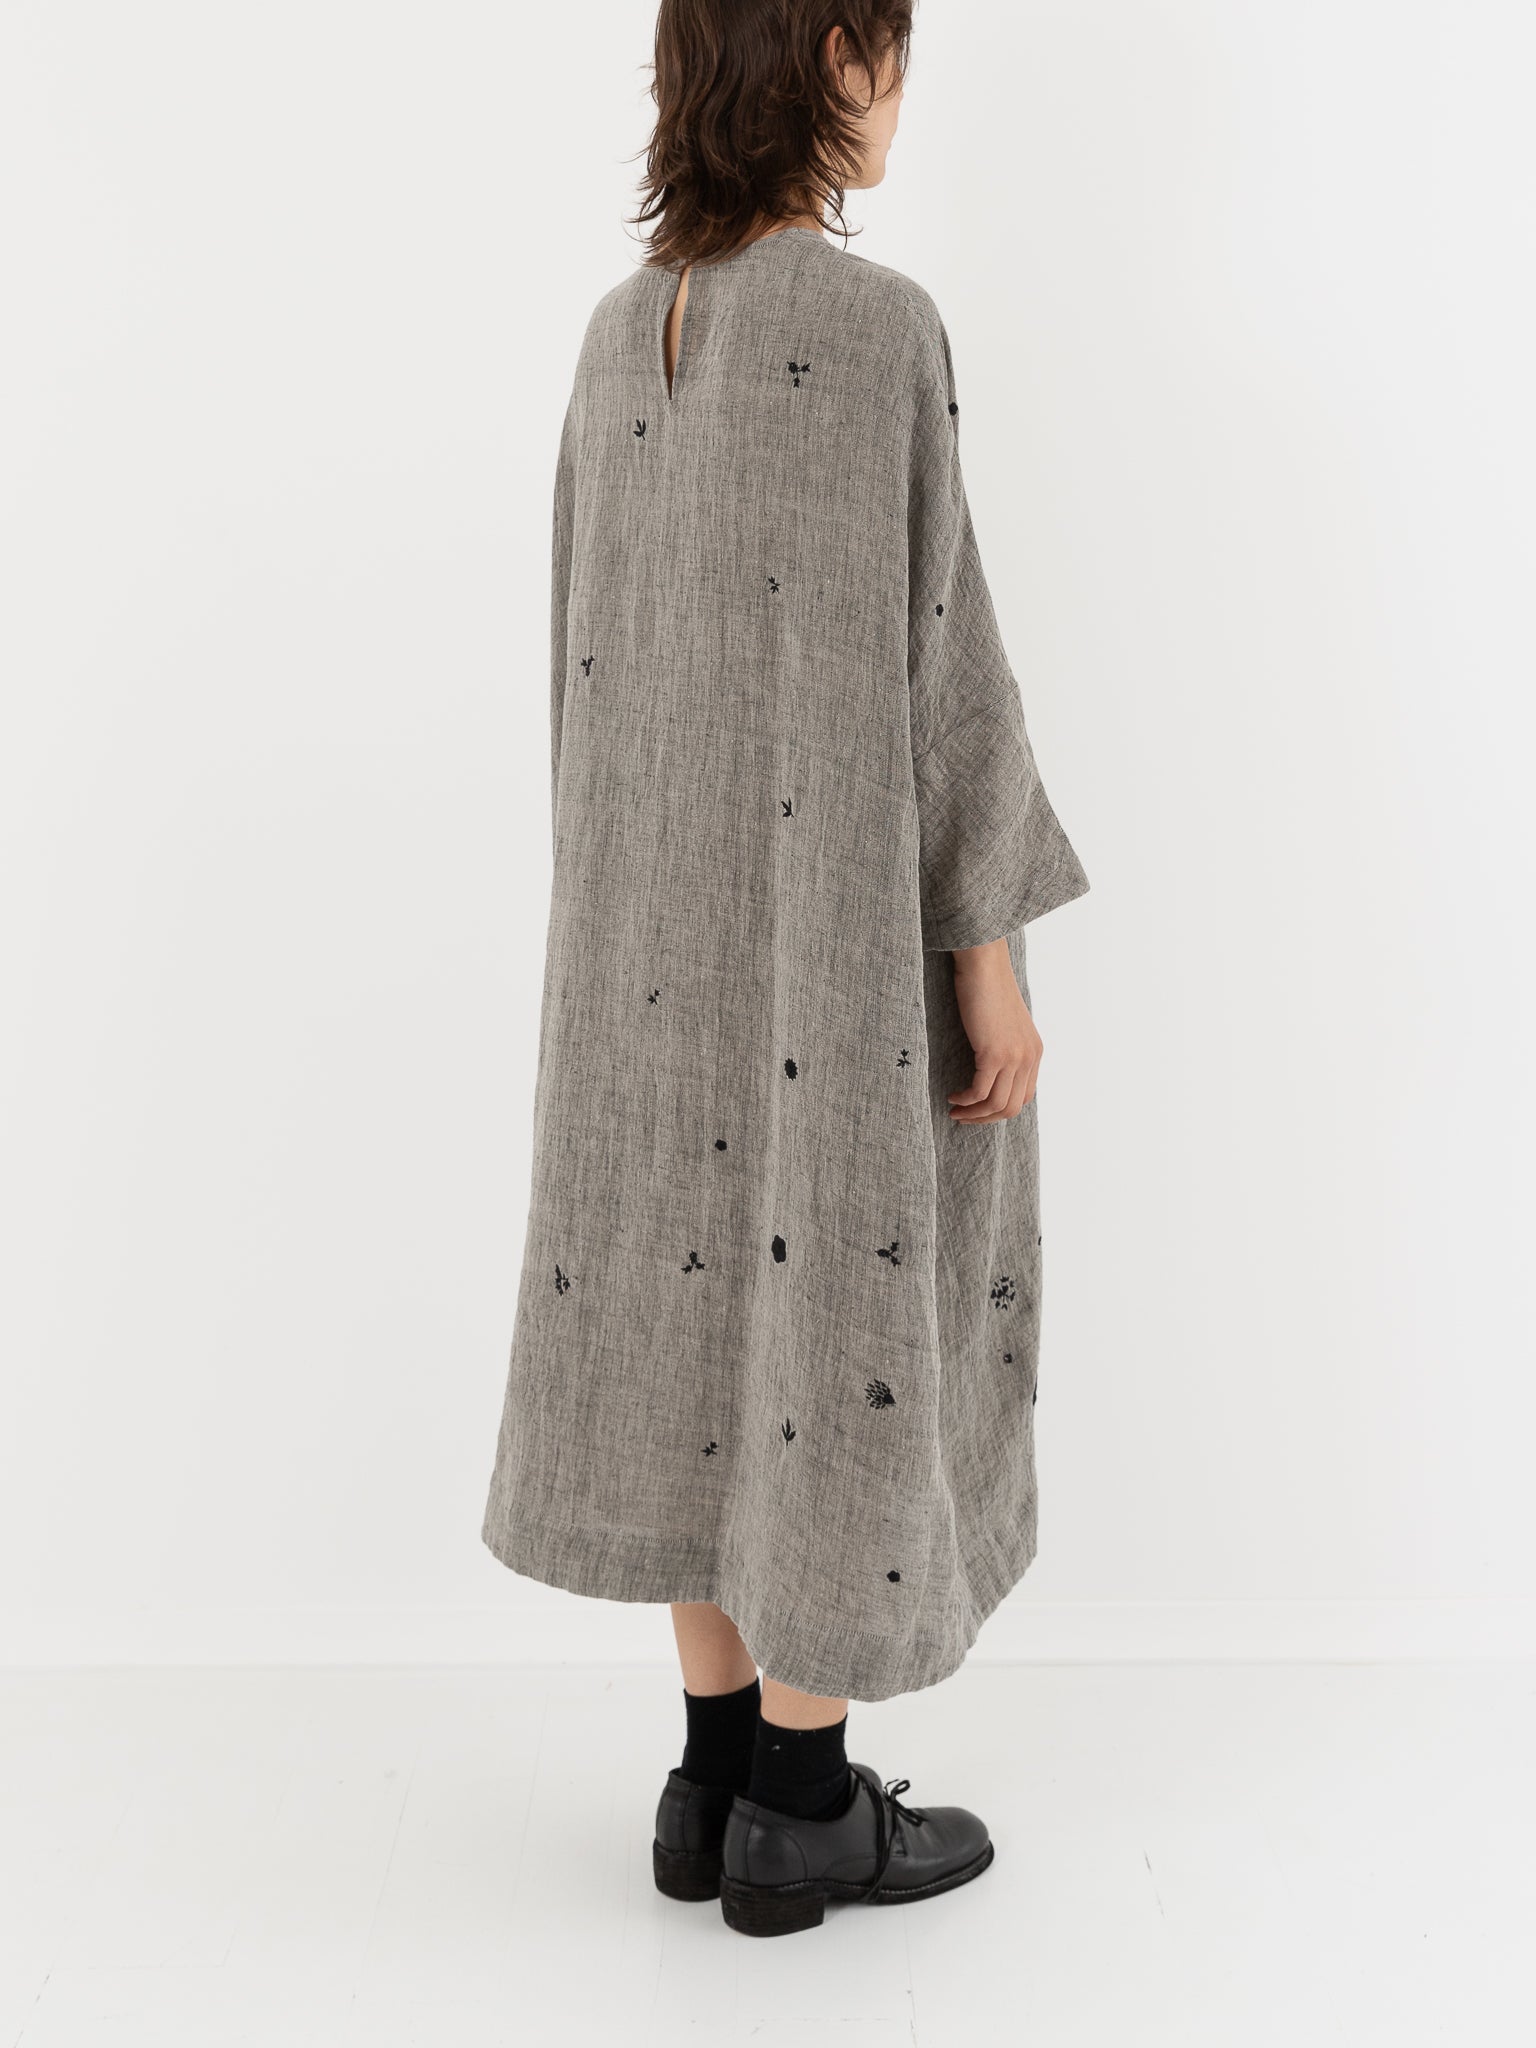 AODress Round Embroidered Dress 16, Grey - Worthwhile, Inc.